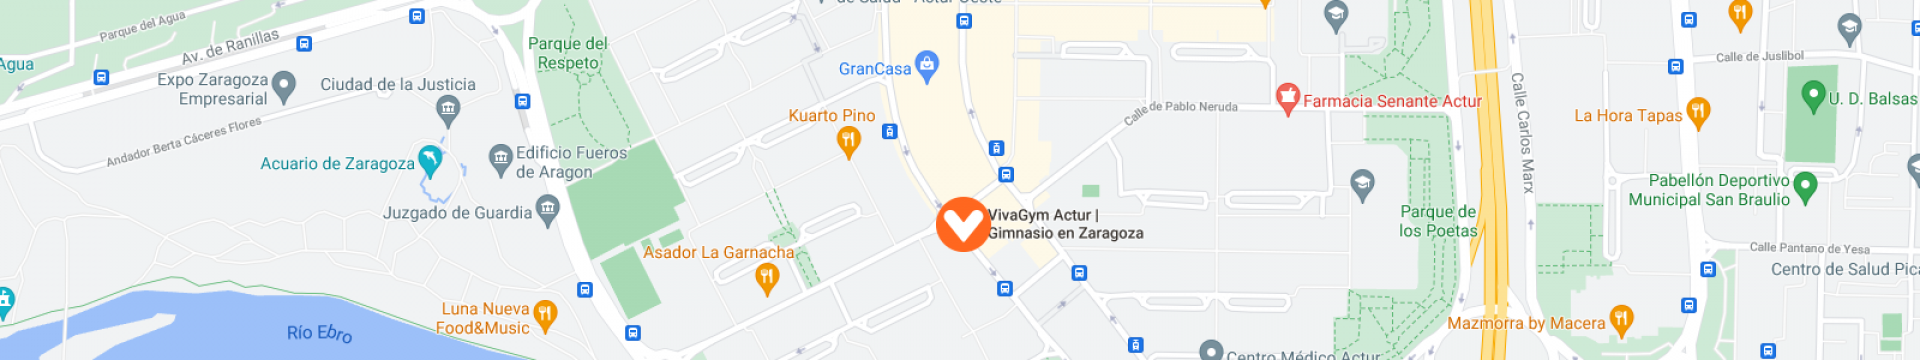 mapa vivagym actur